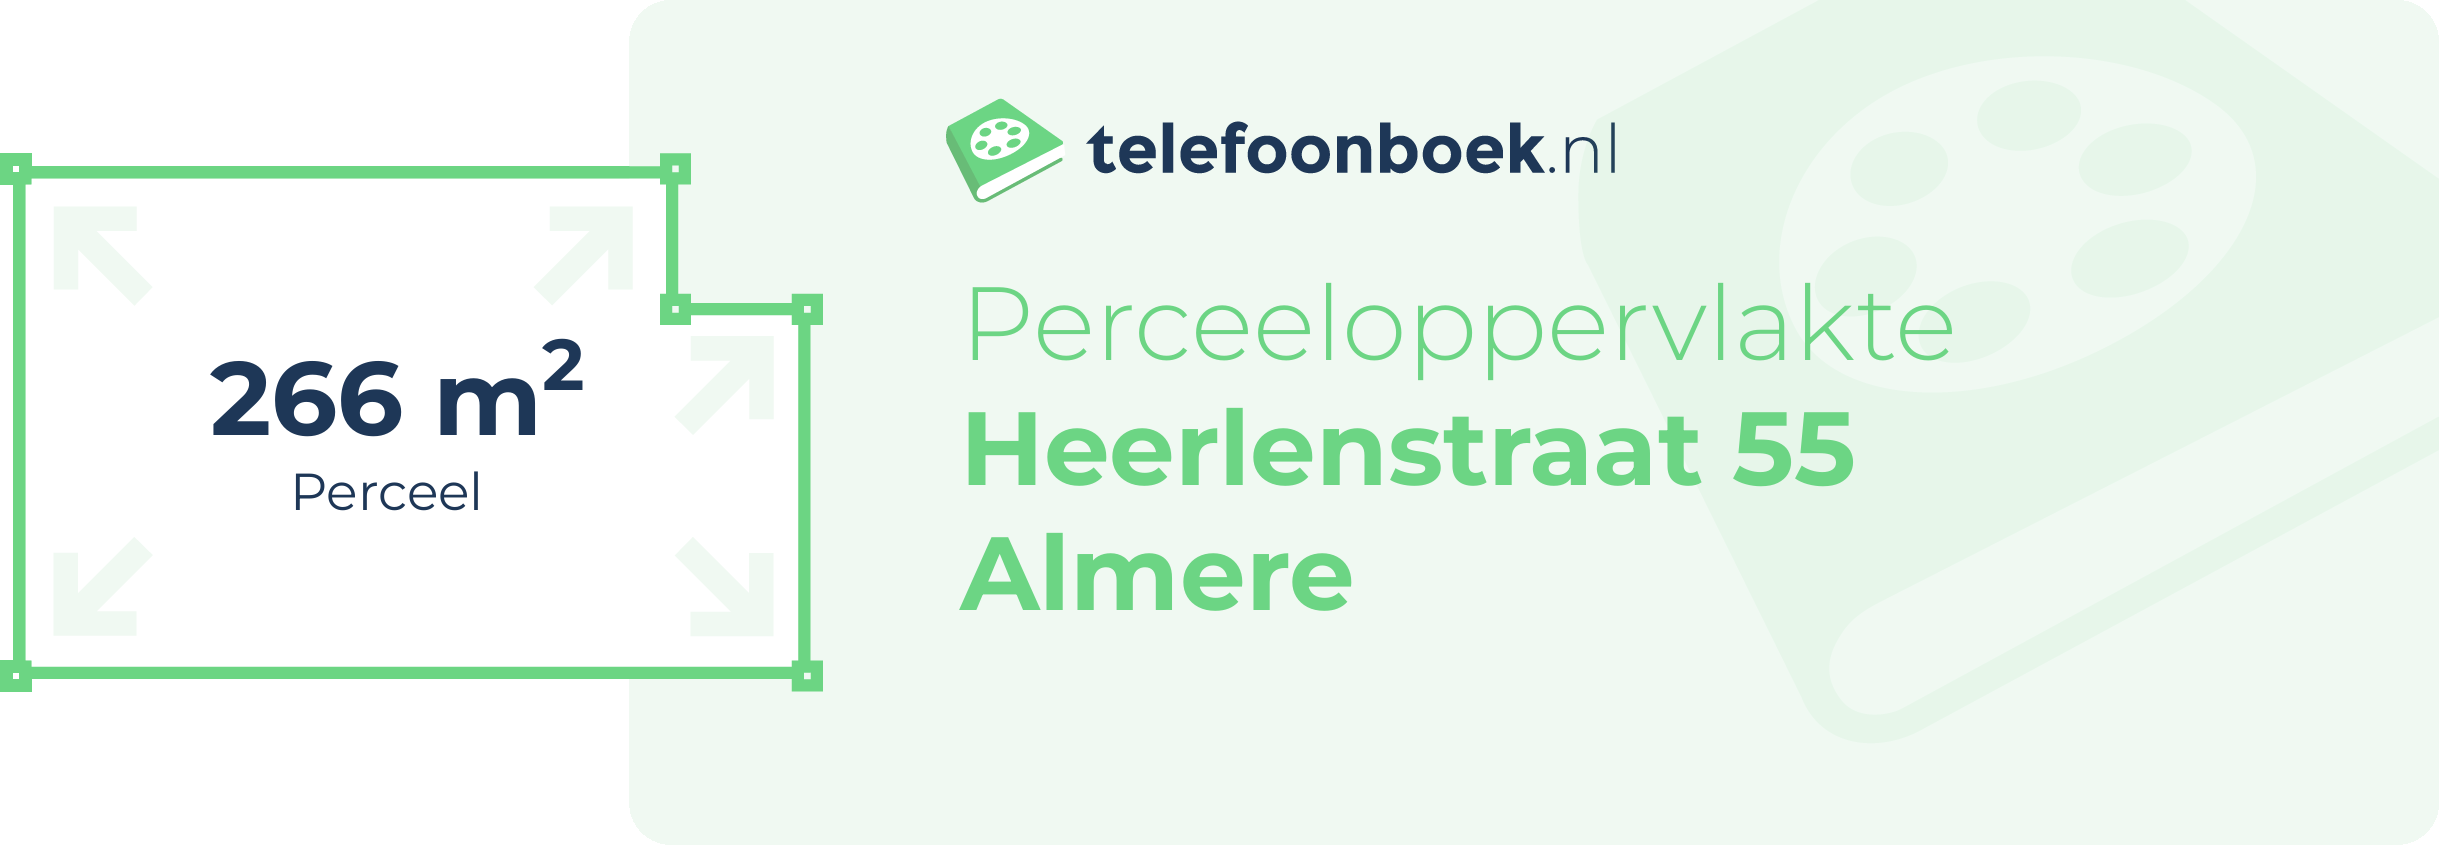 Perceeloppervlakte Heerlenstraat 55 Almere